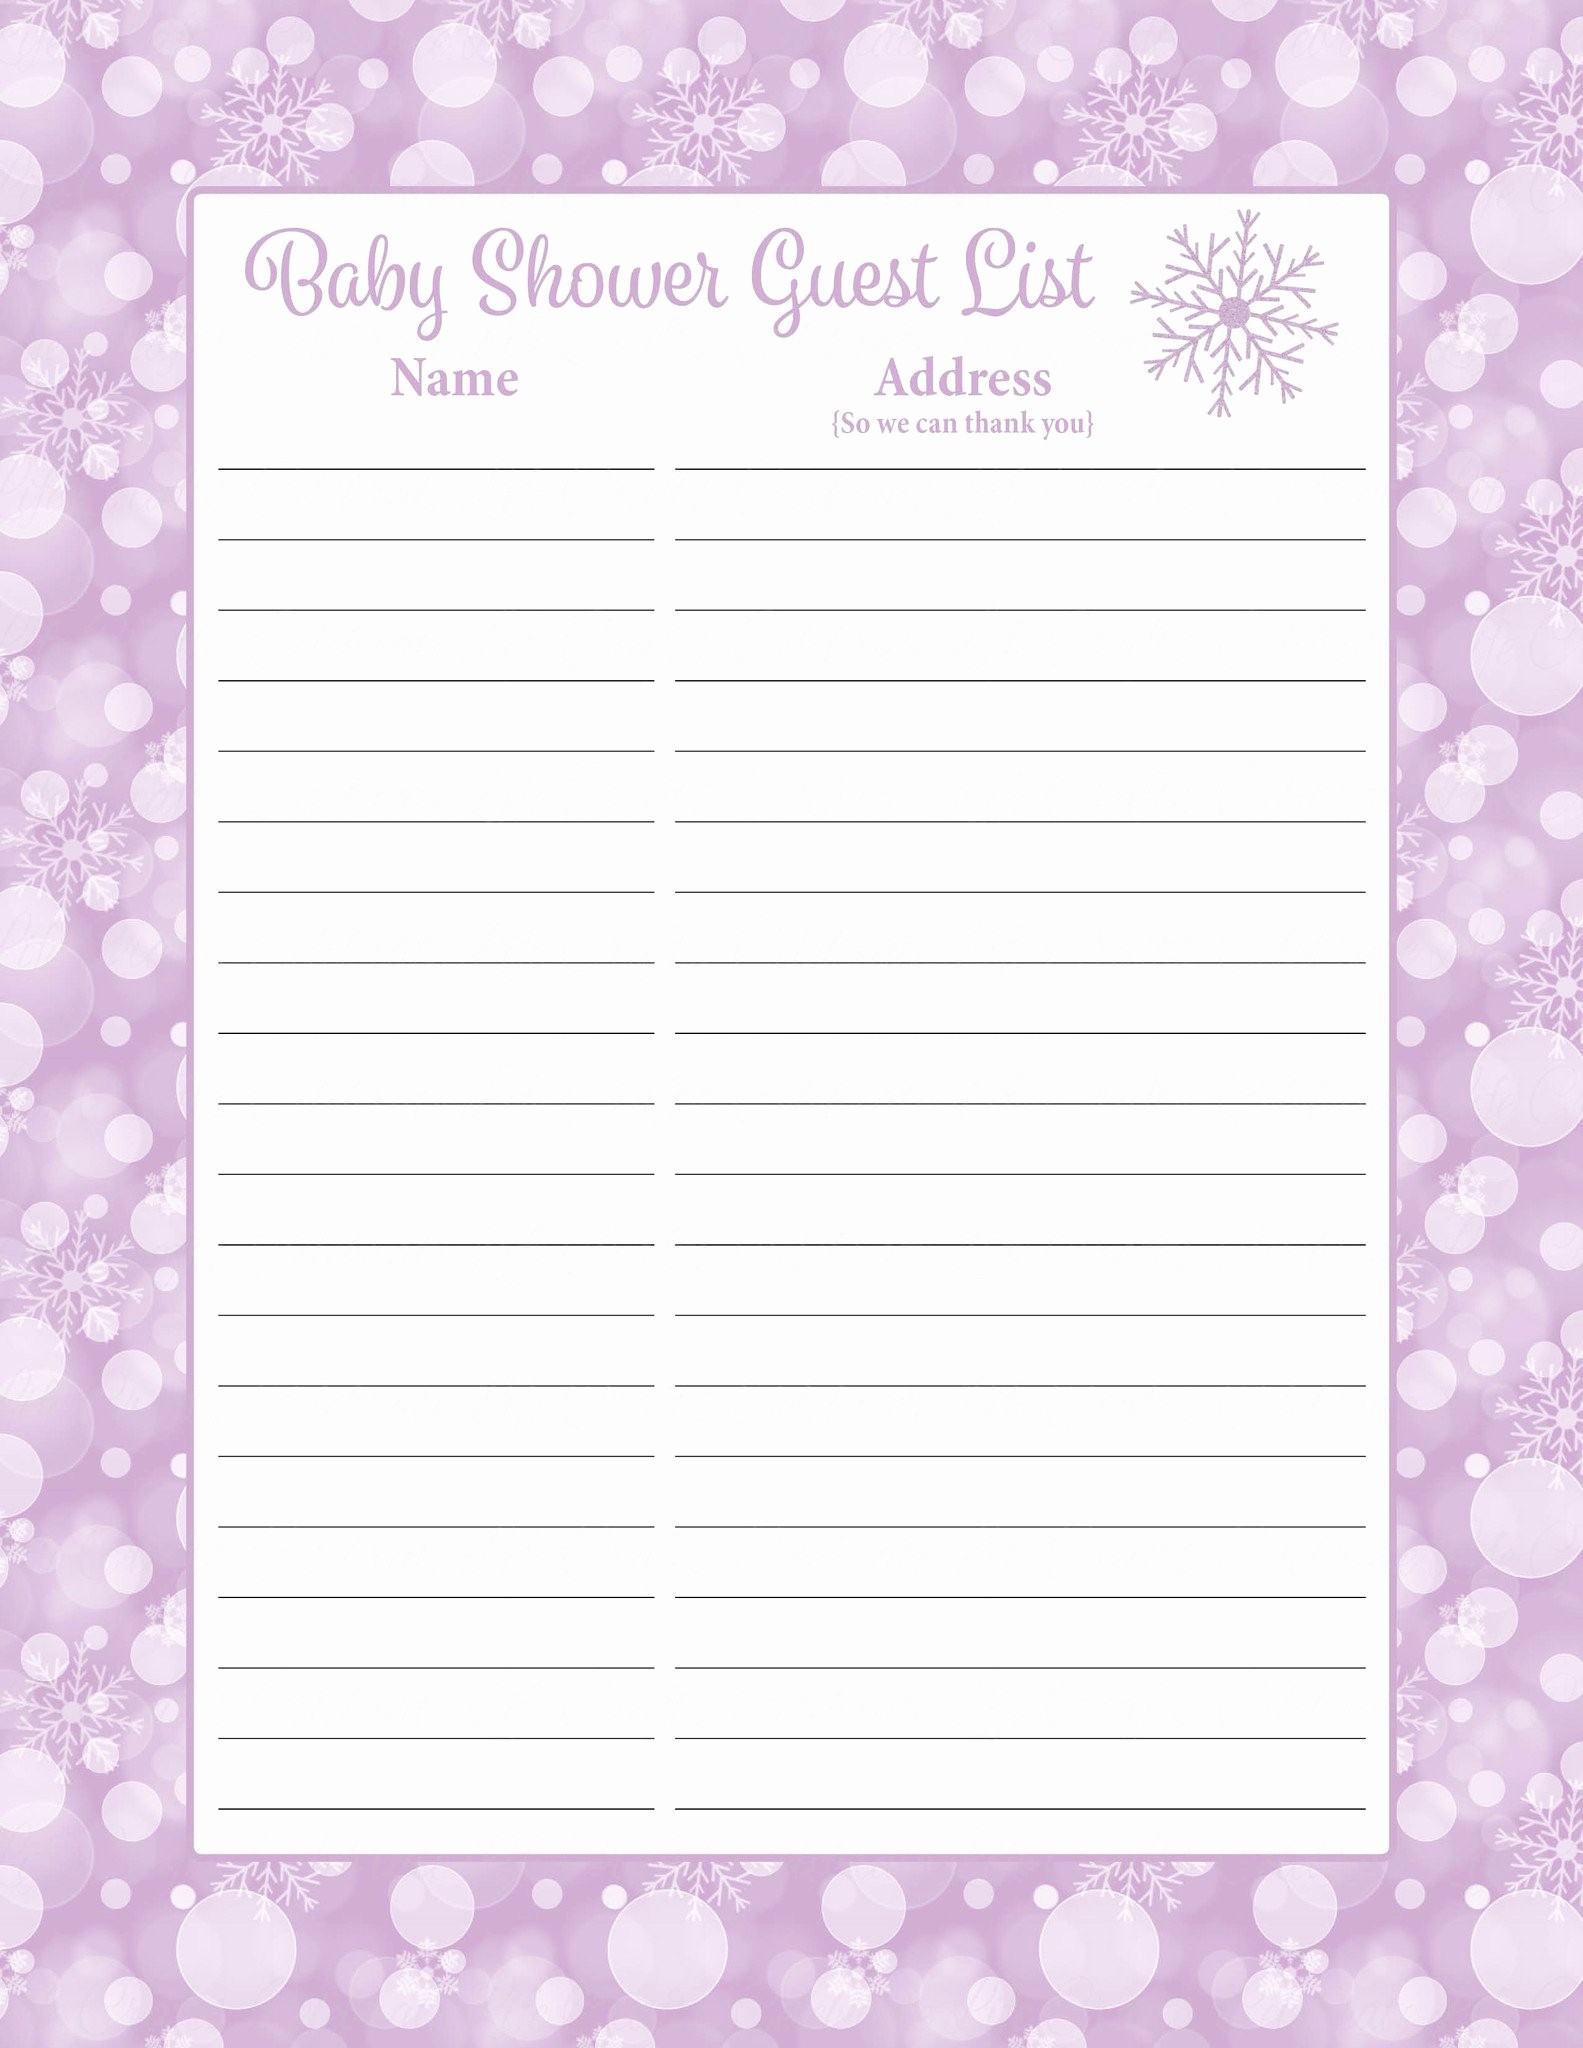 Baby Shower Guest List Printable Elegant Printable Baby Shower Guest List Portablegasgrillweber